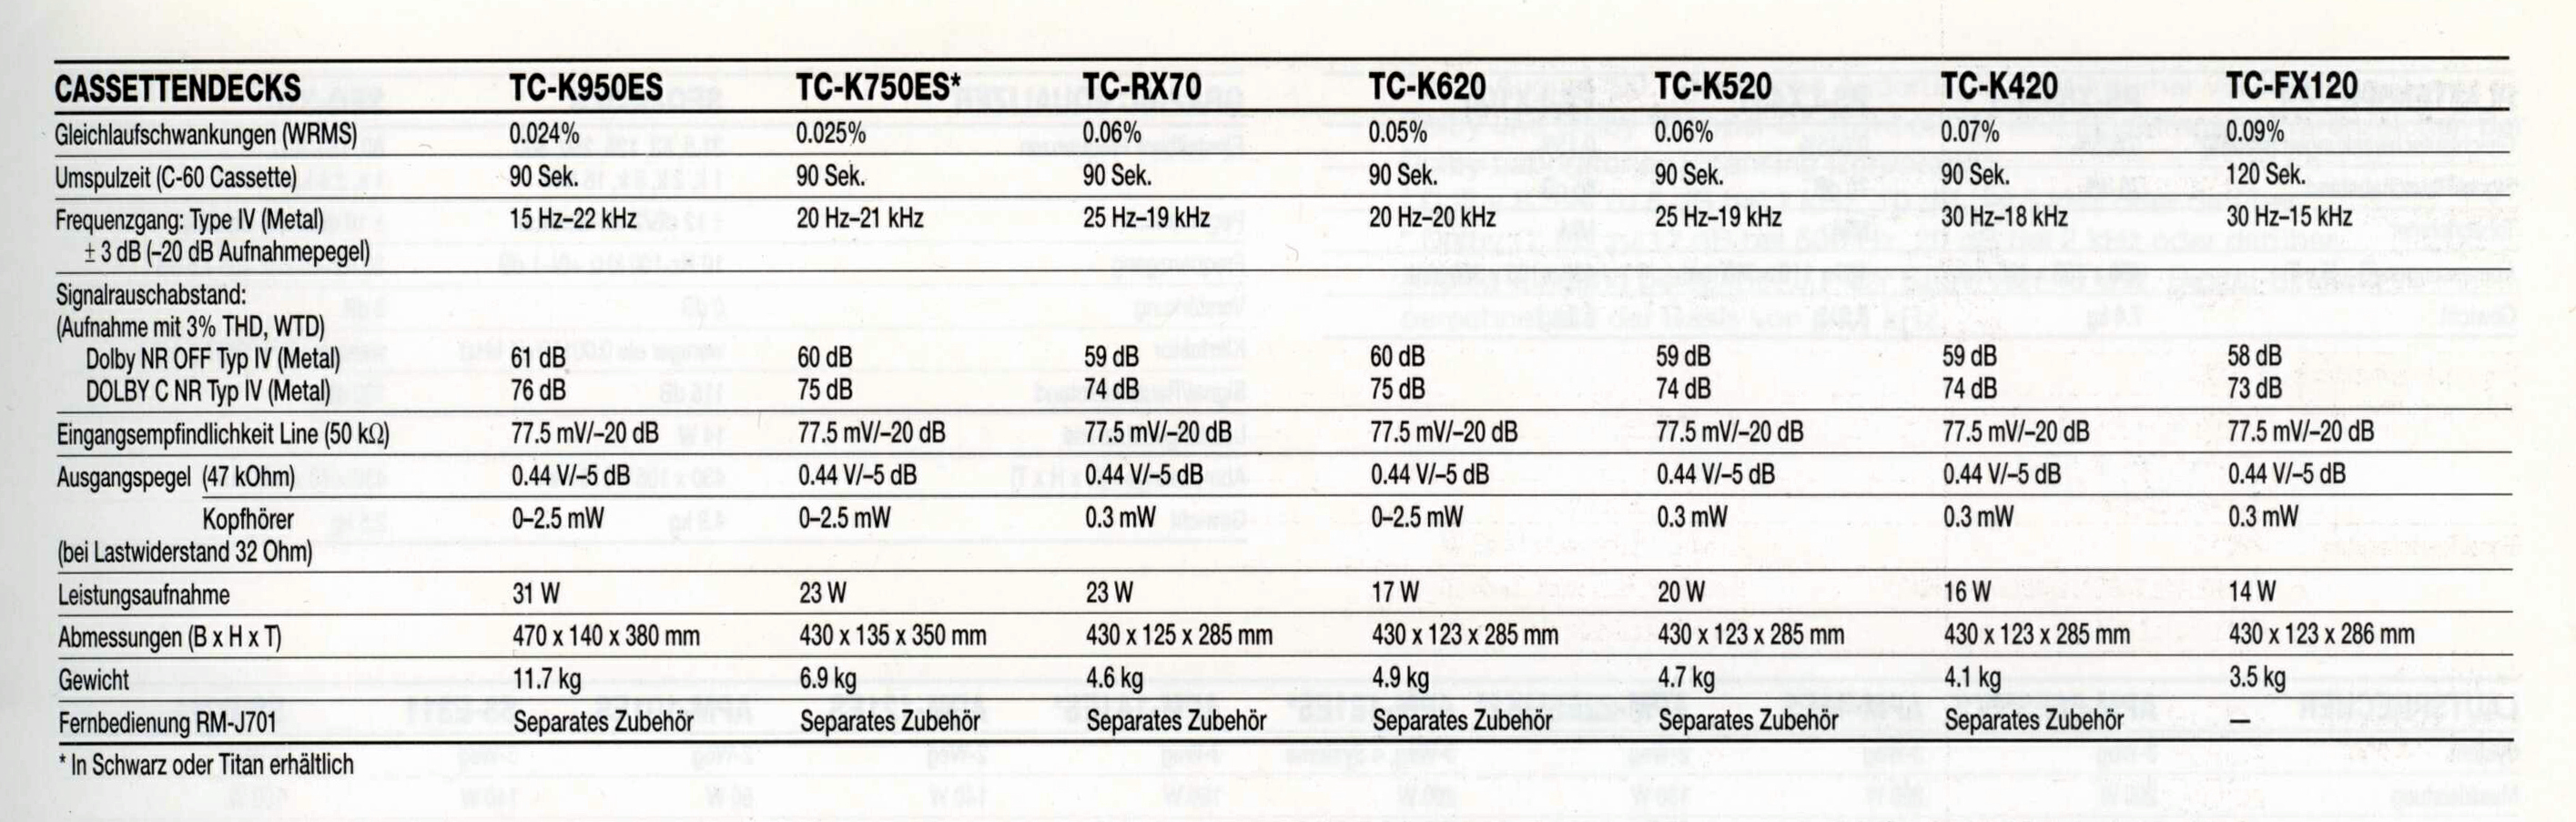 Sony TC-FX 120-K420-620-750-950 ES-RX-70-Daten.jpg